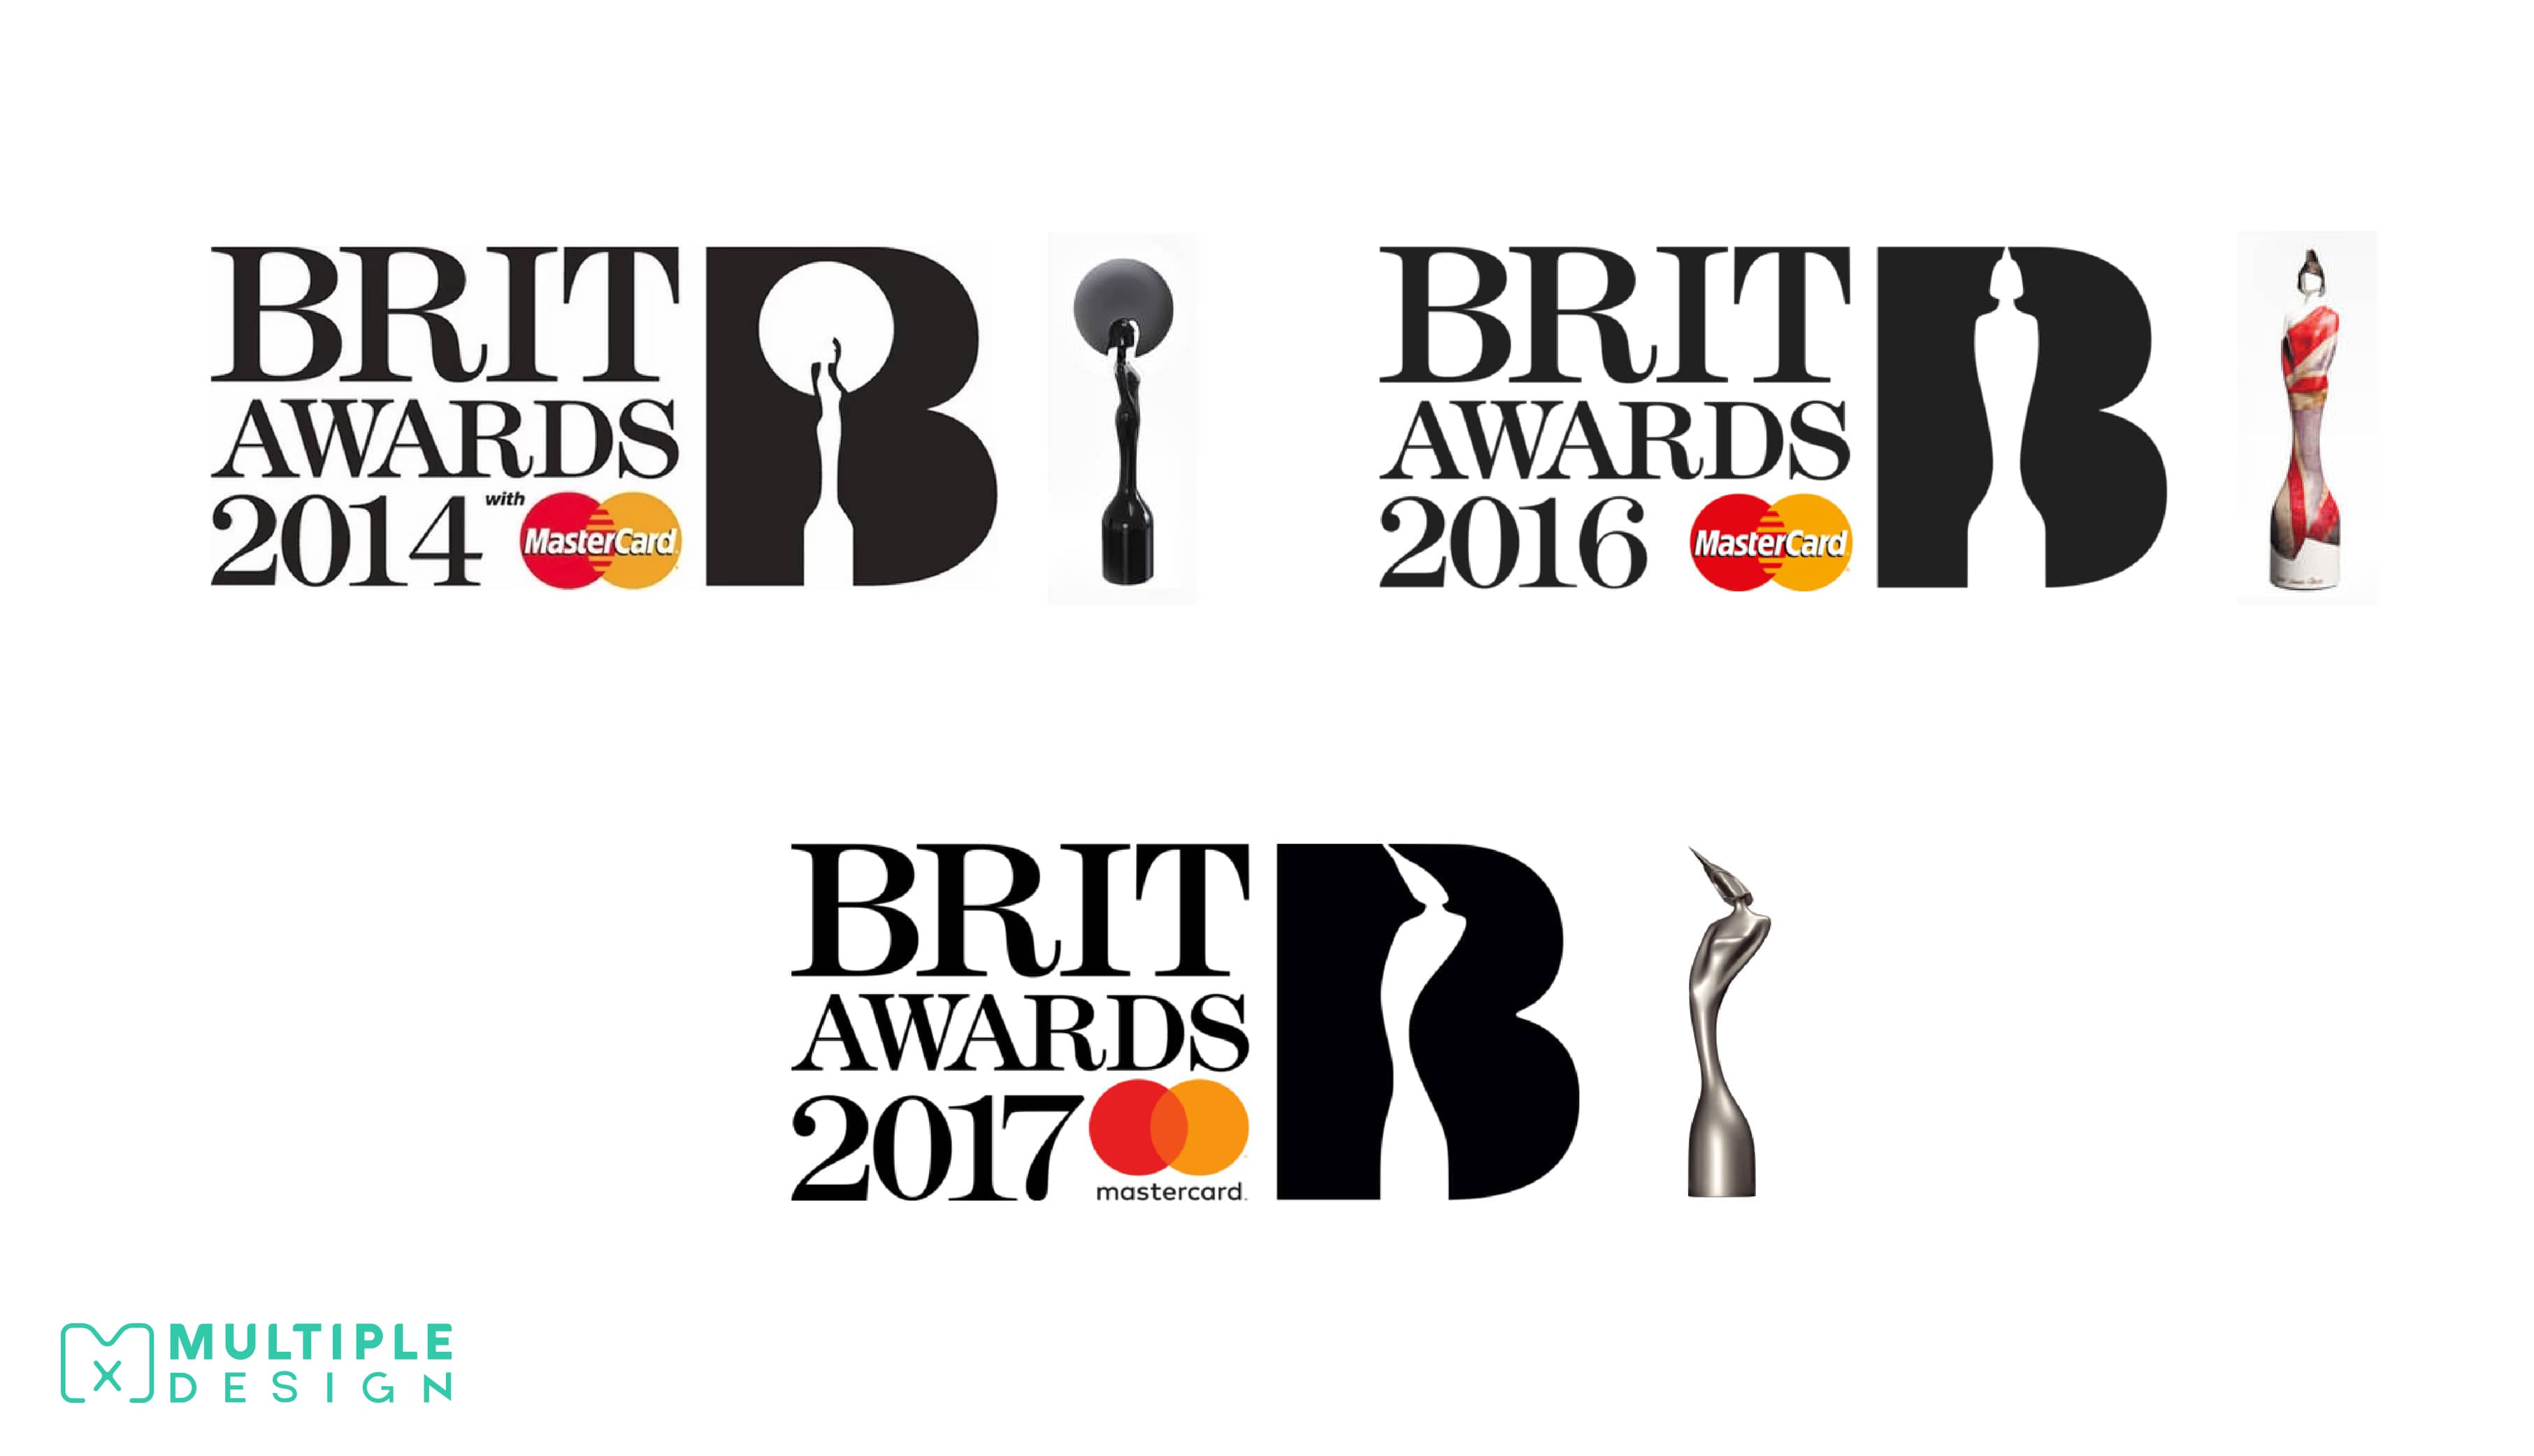 BRIT Awards, logo, changes every year, britannia